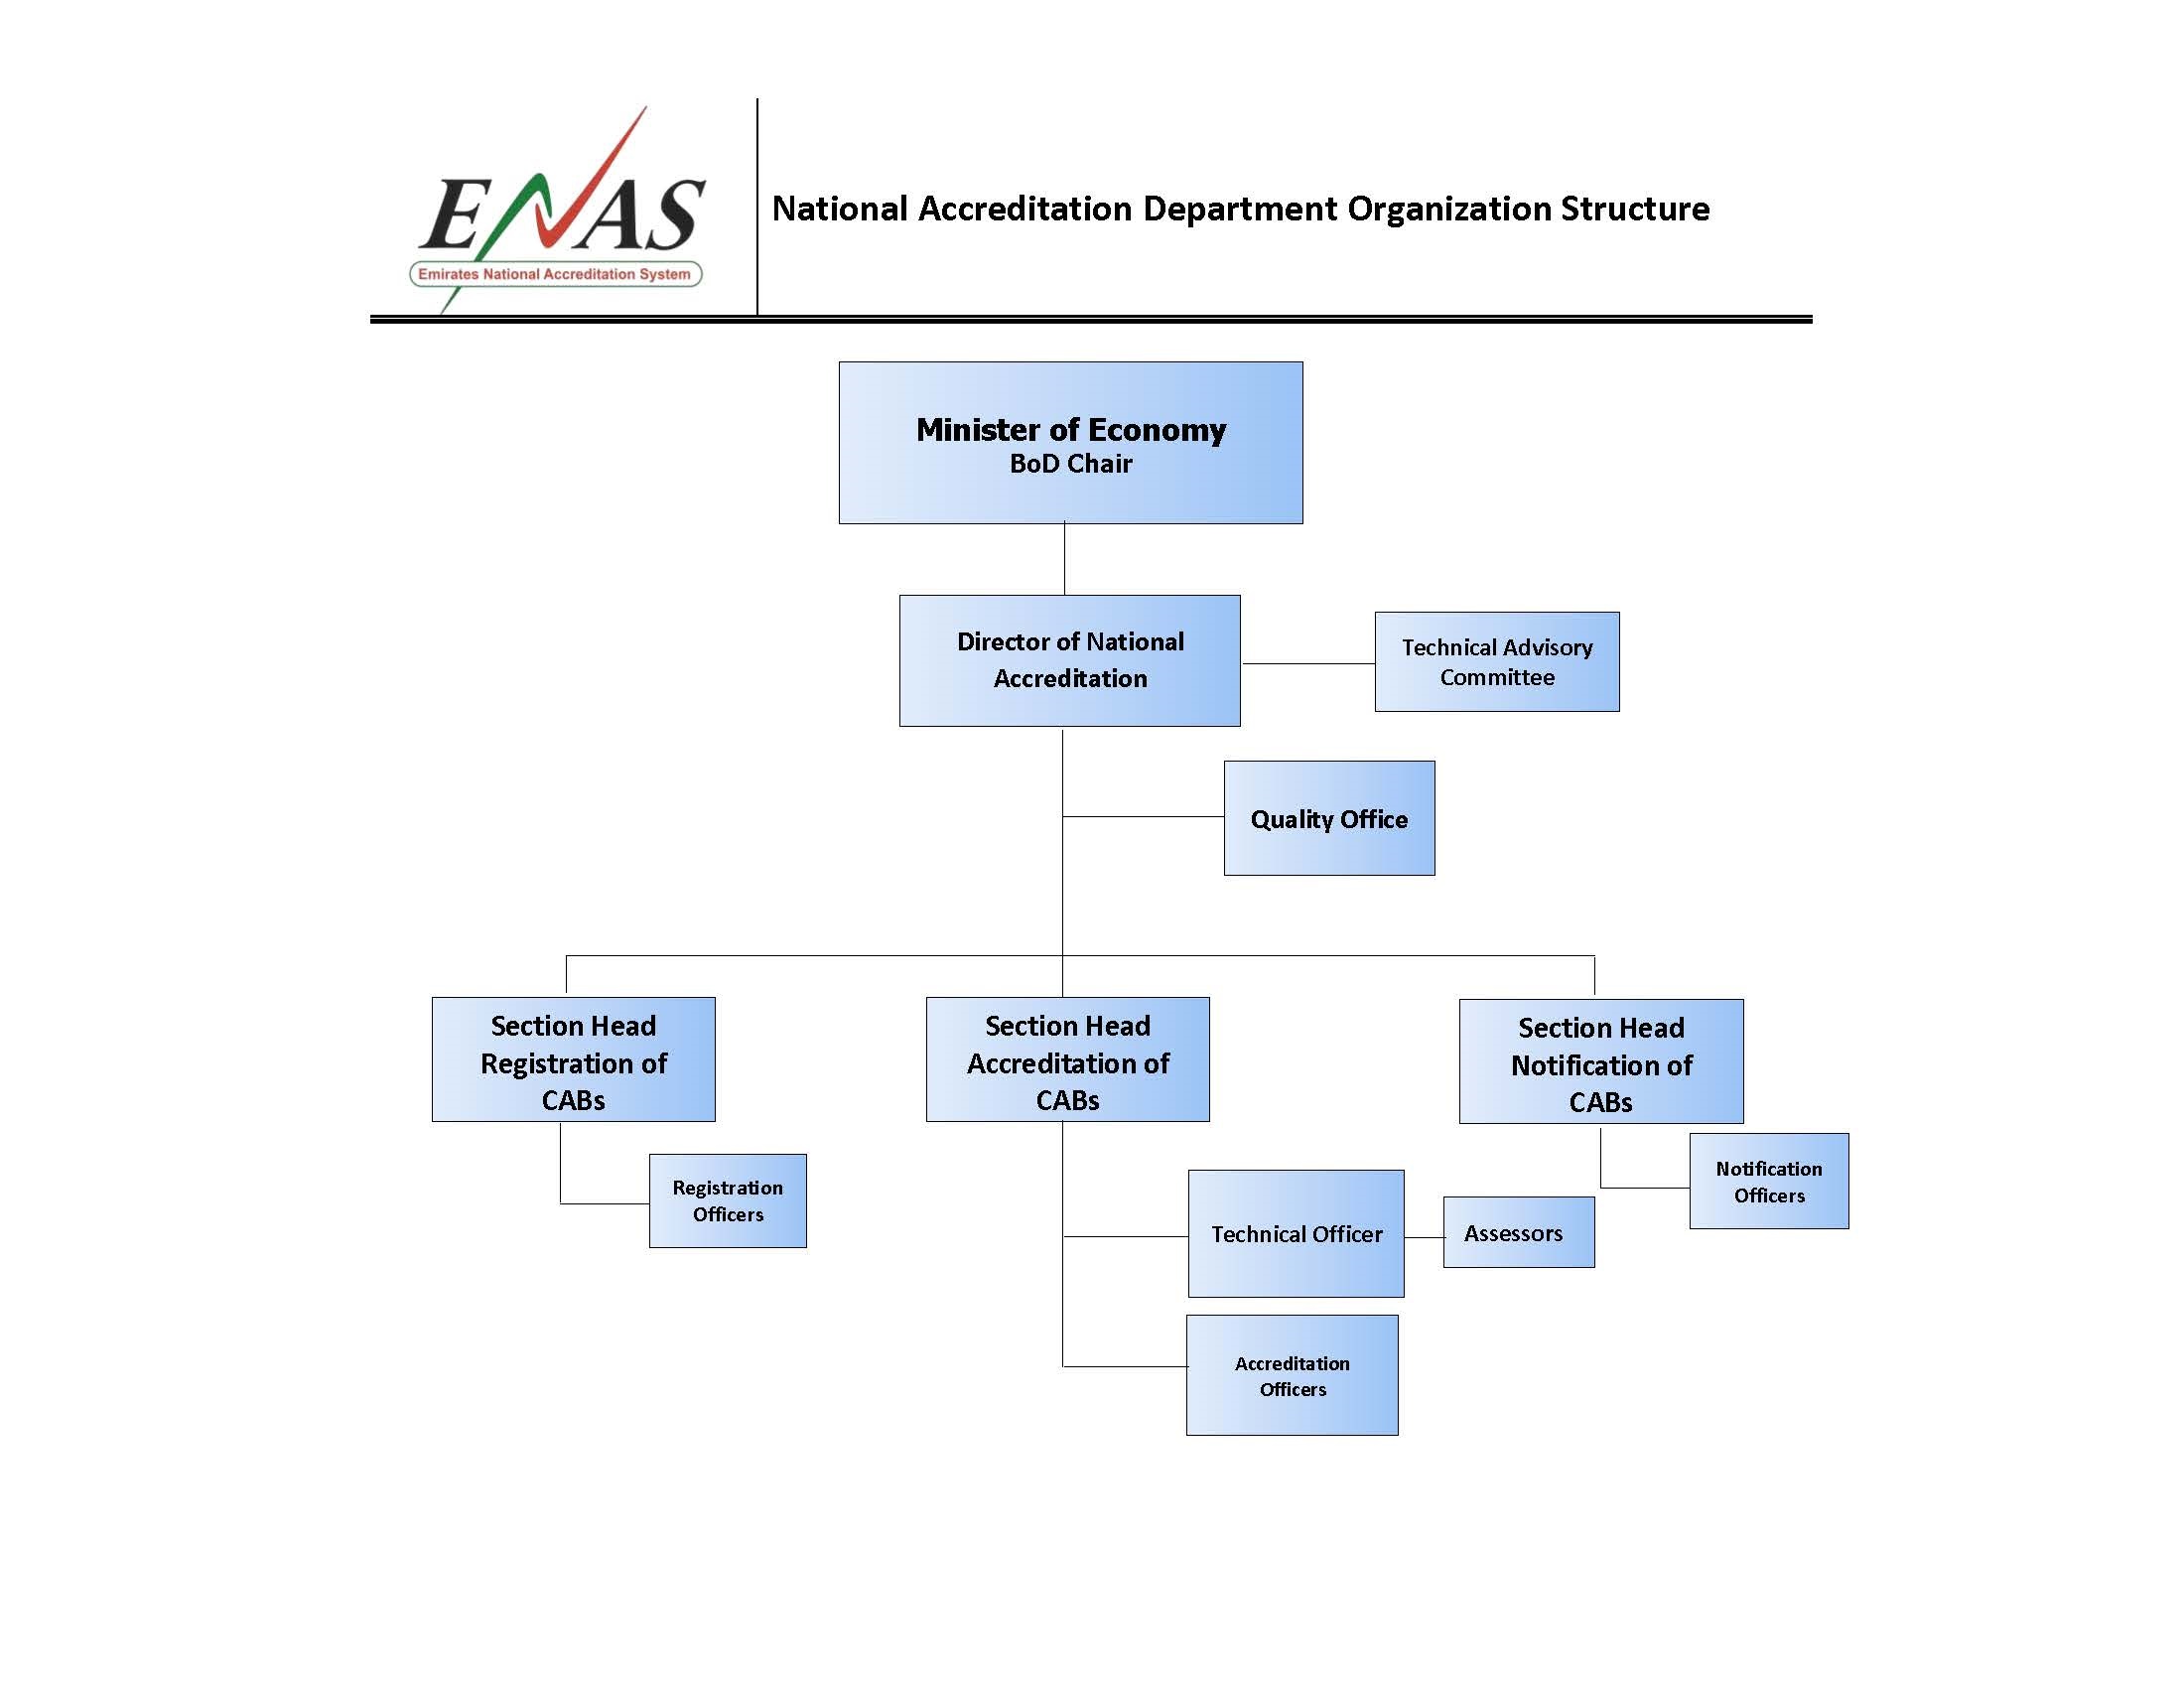 ENAS Organistaion Chart.jpg